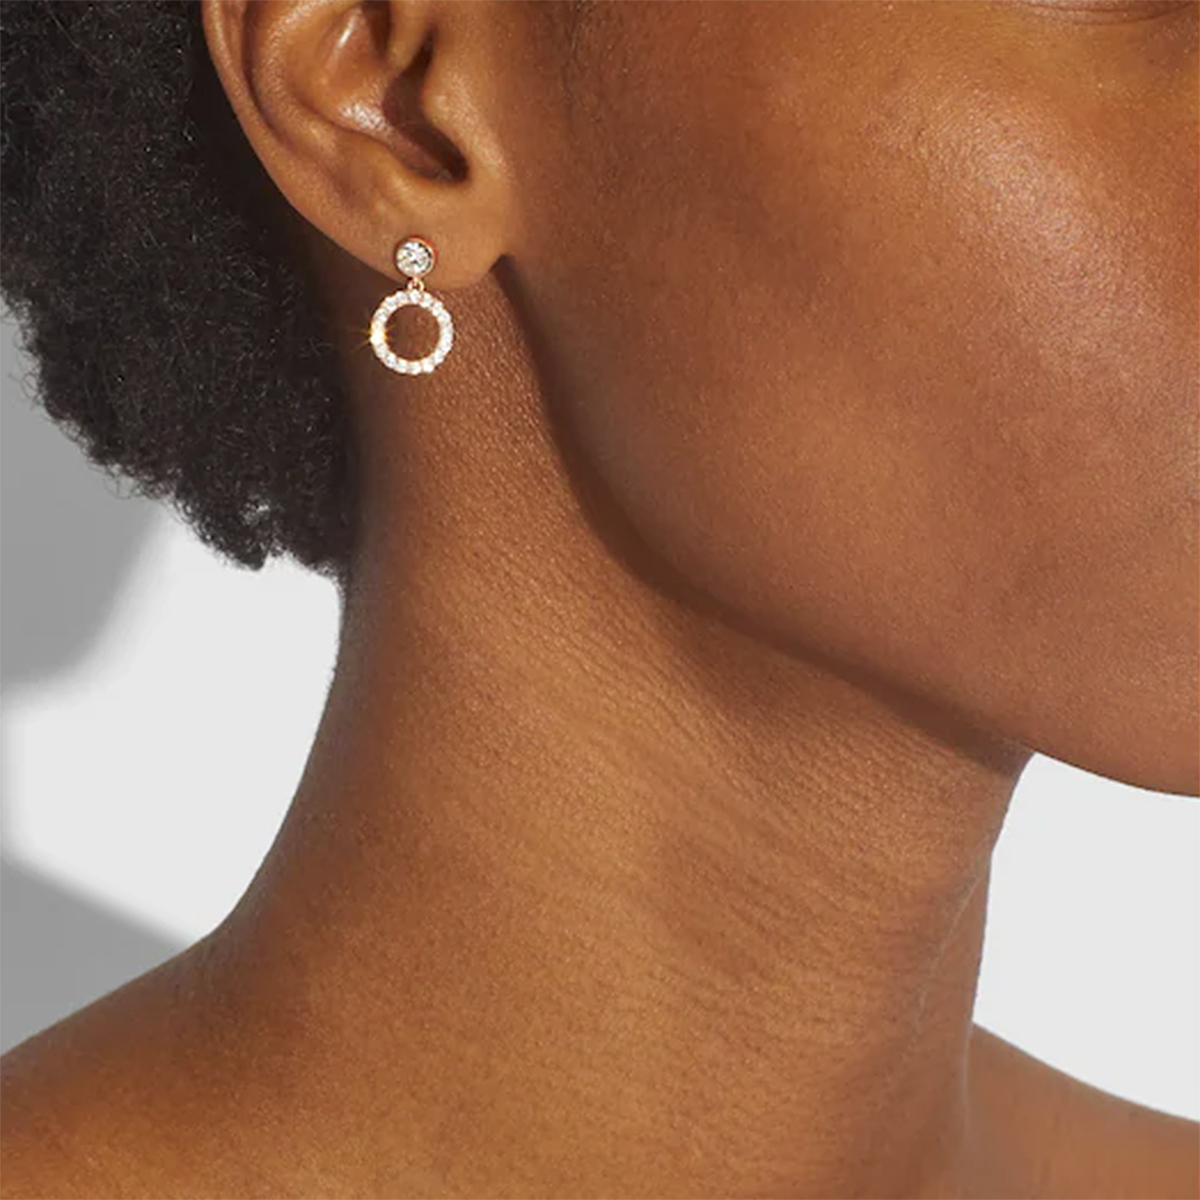 Share 204+ earrings under 100 best